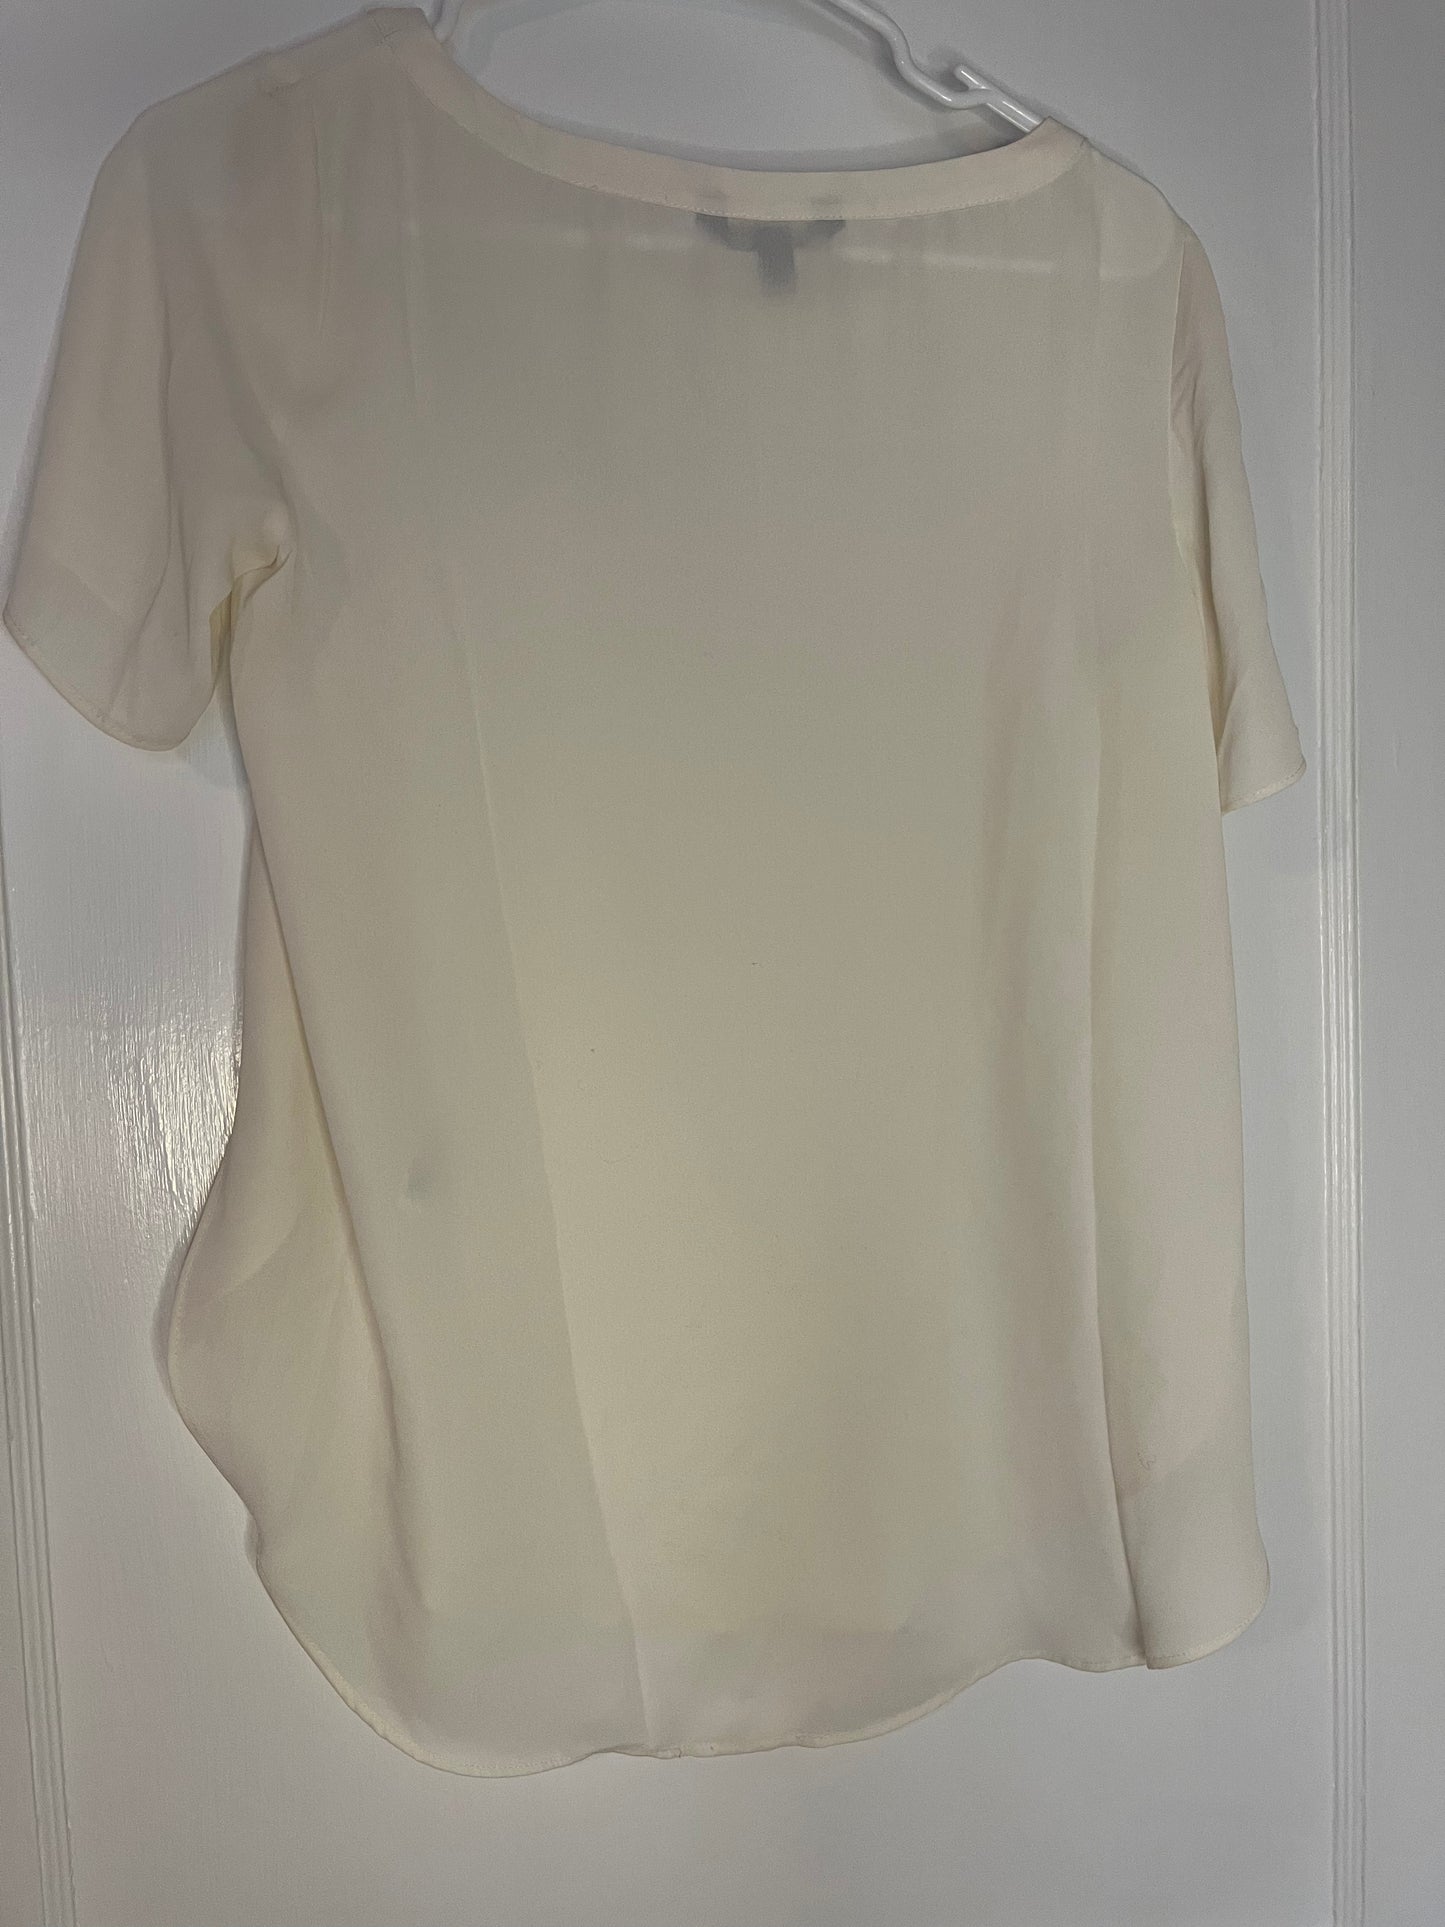 Banana Republic Sheer White Top Shirt Blouse Size X-Small EUC PPU 45208 or Spring Sale